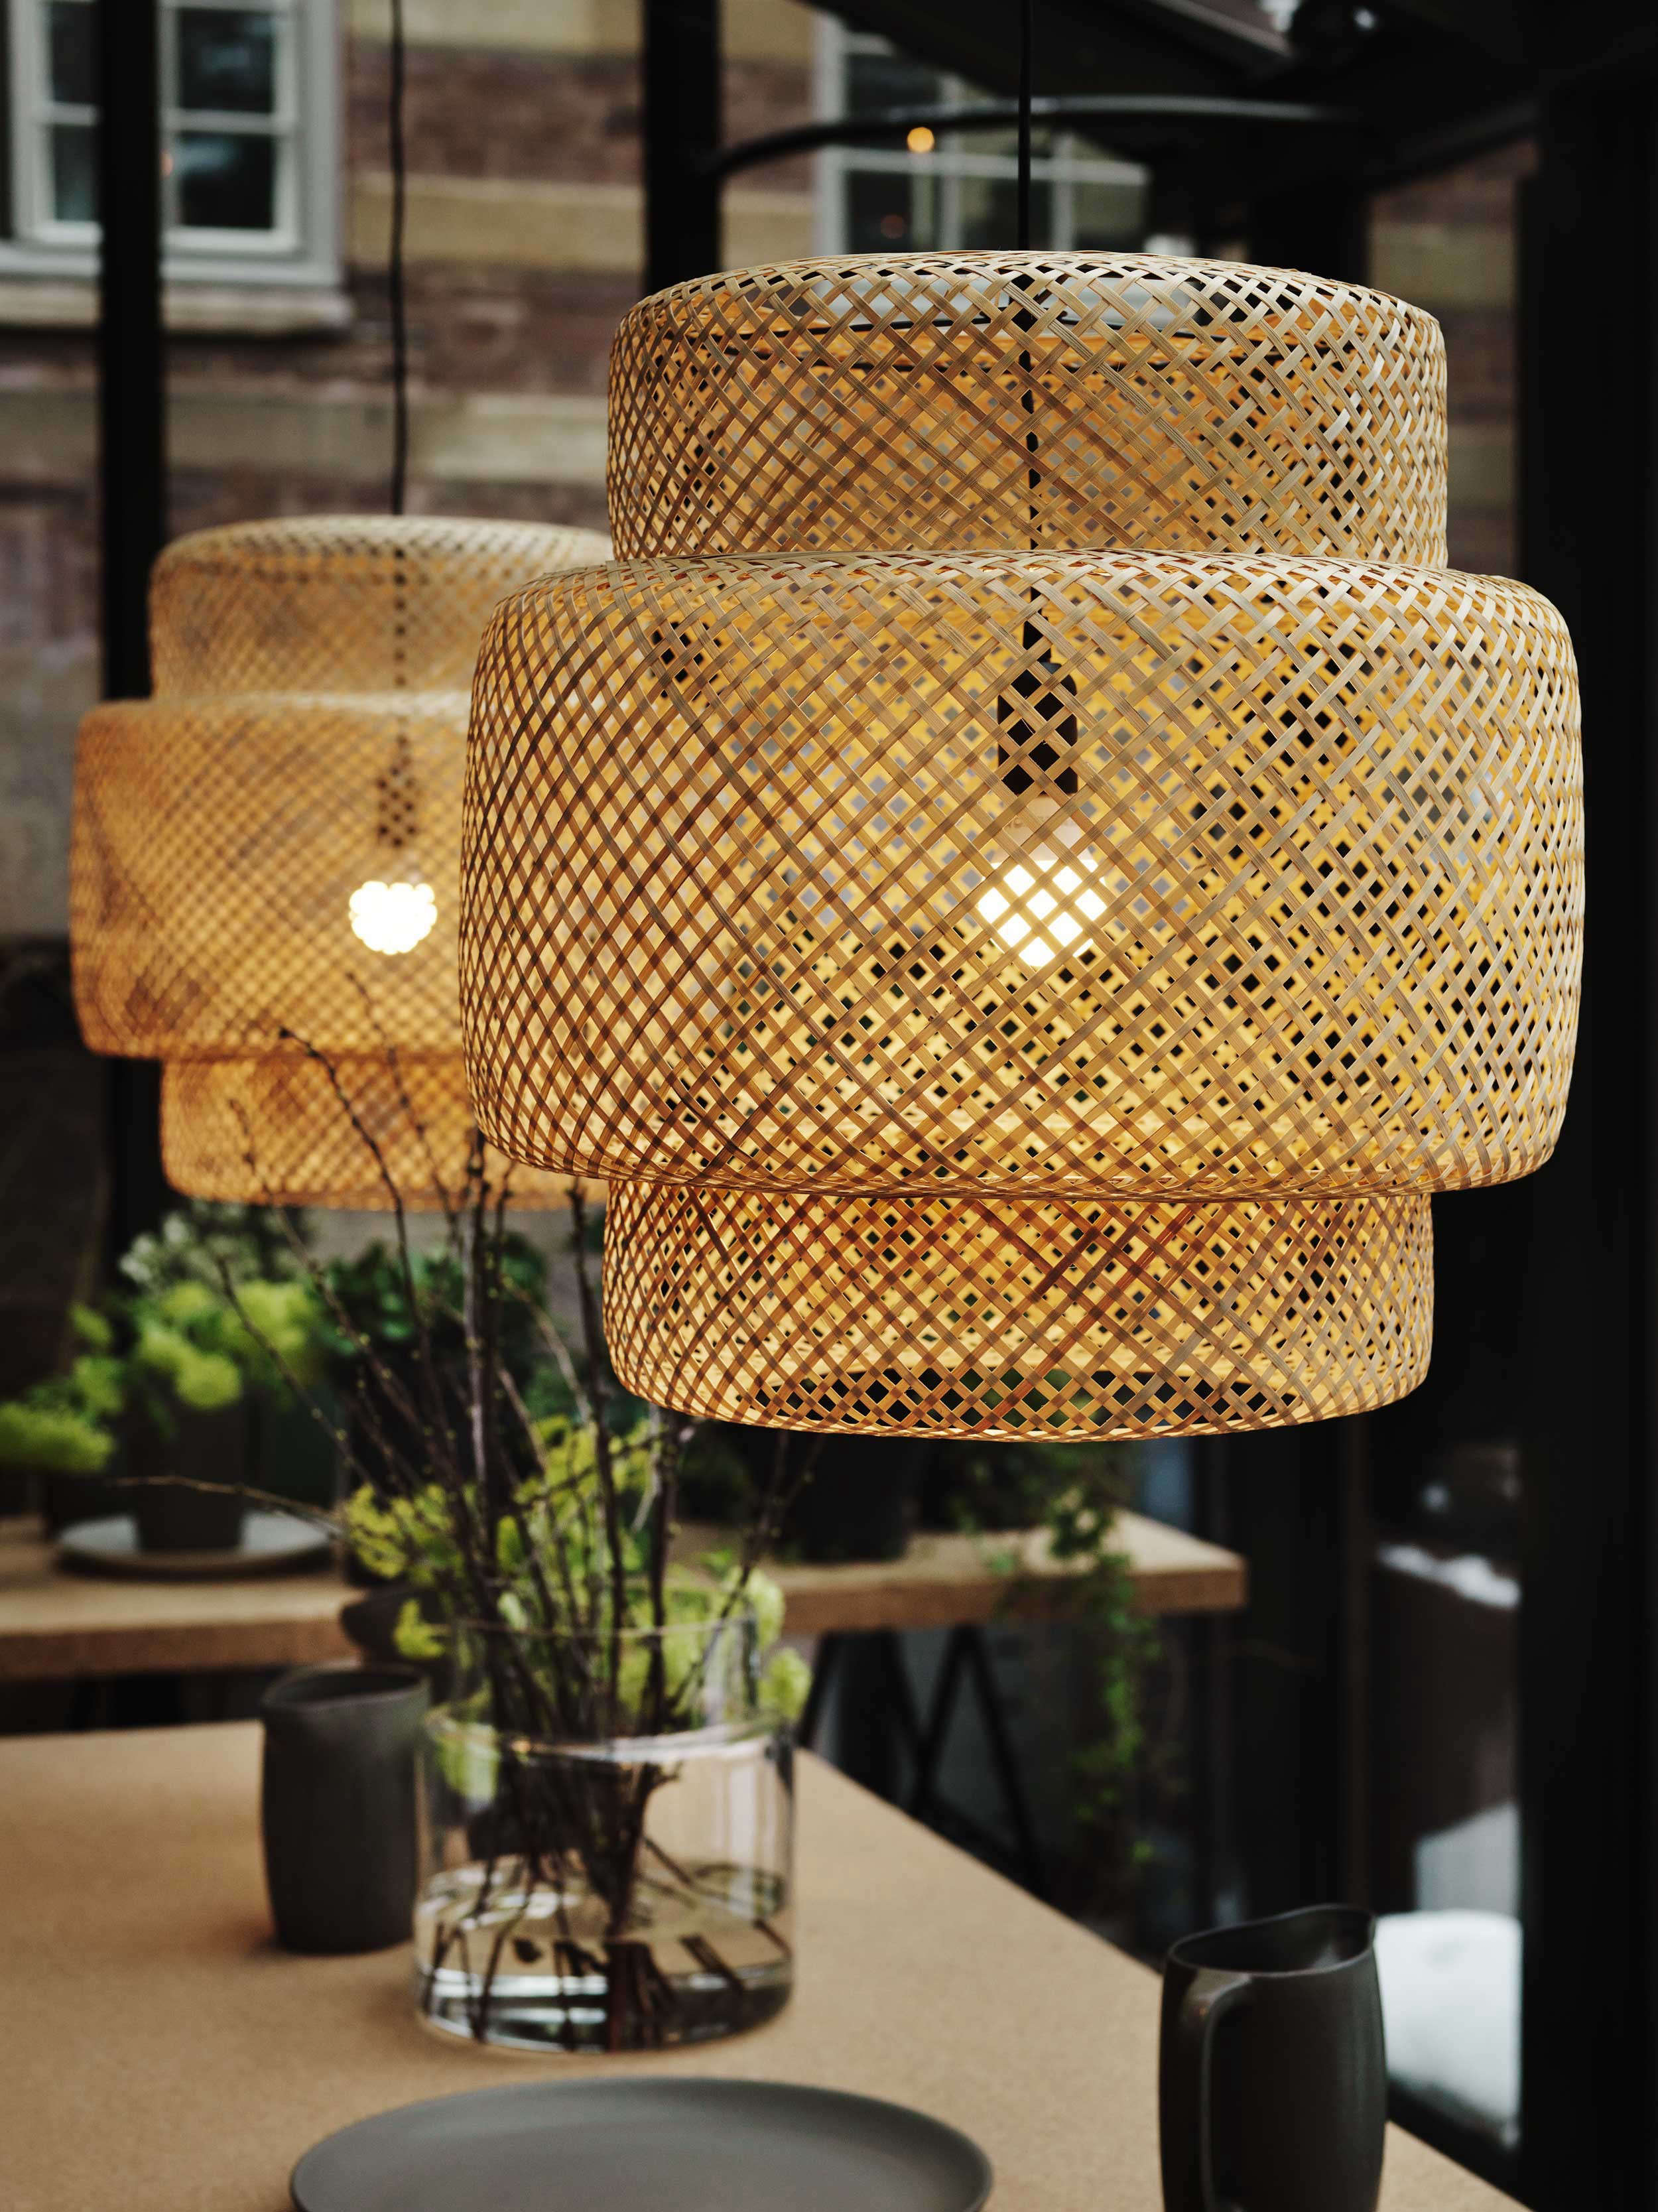 Bamboo pendant light